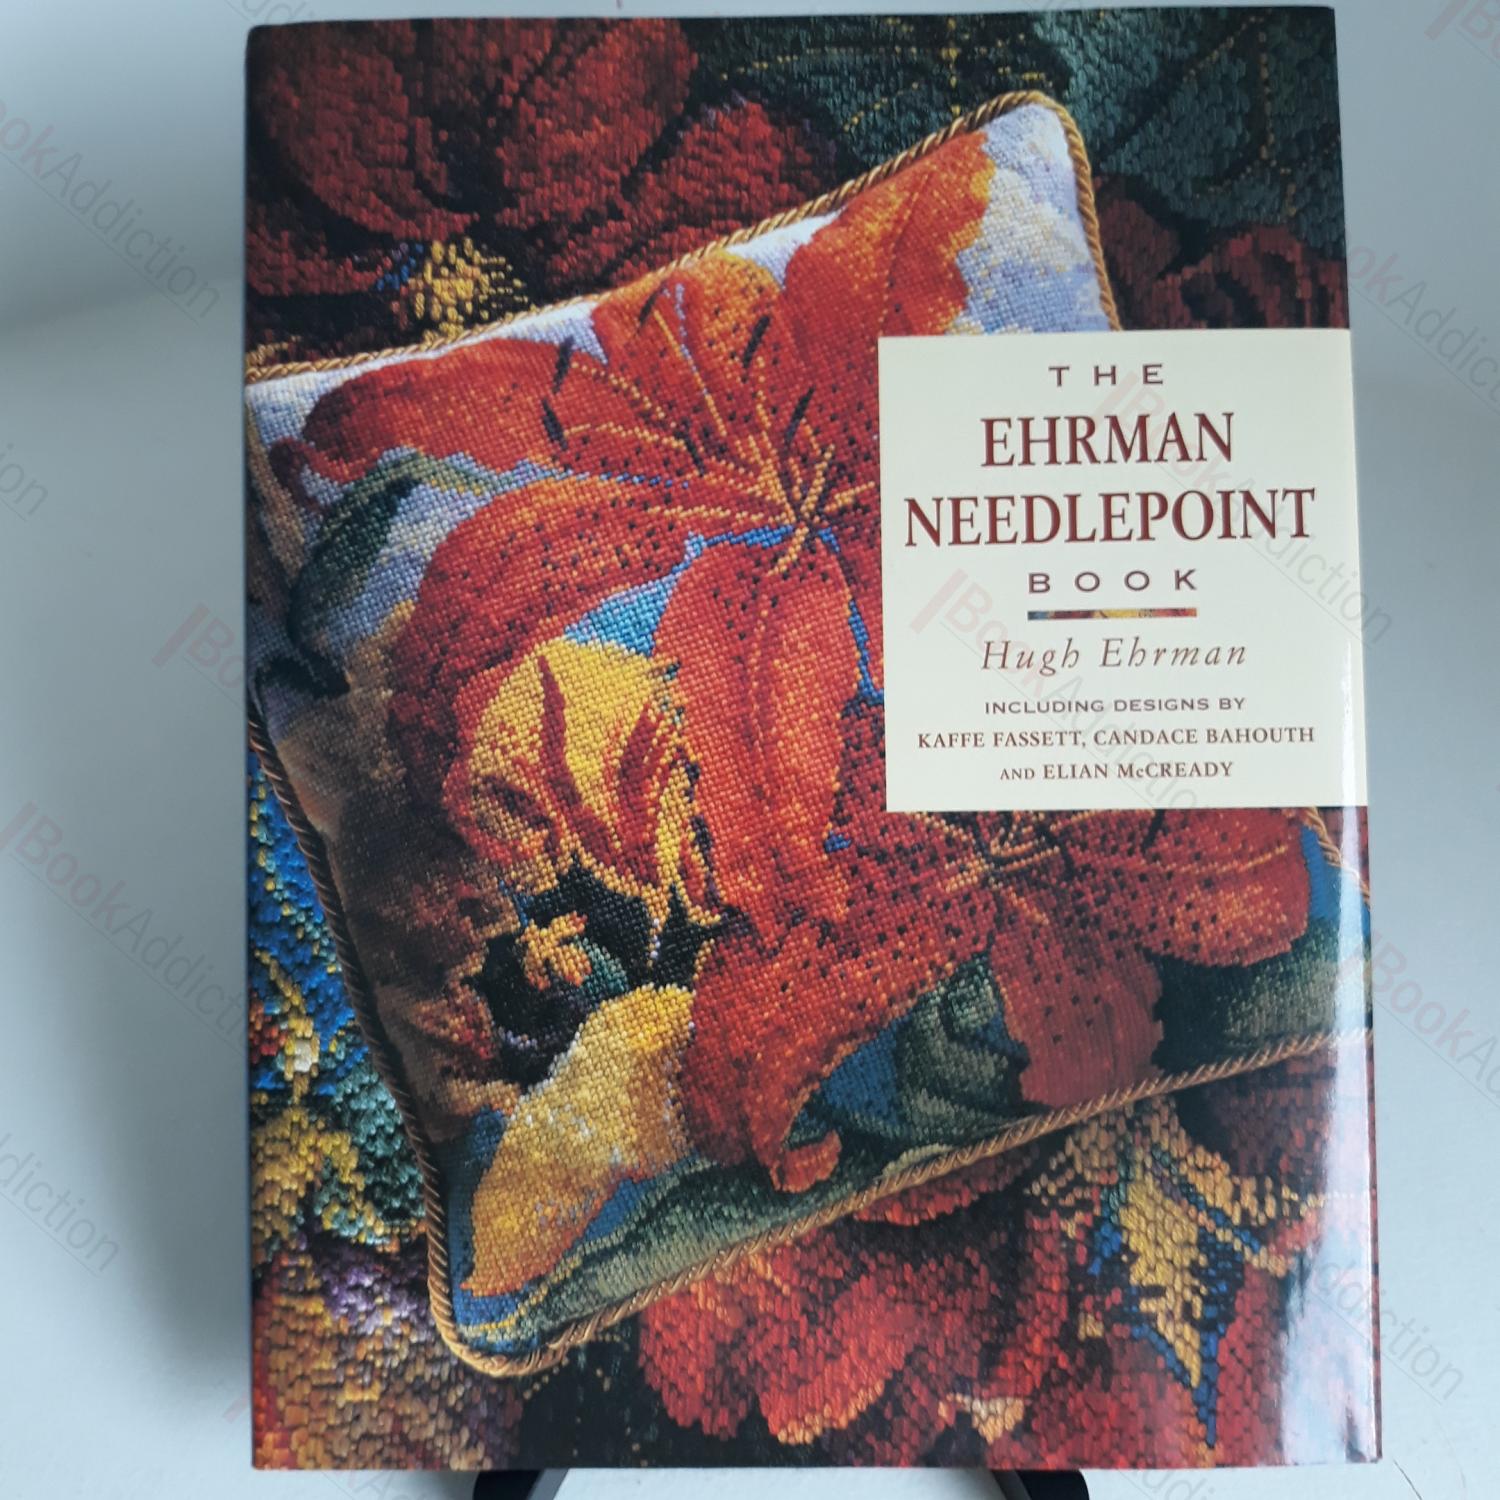 The Ehrman Needlepoint Book book by Hugh Ehrman